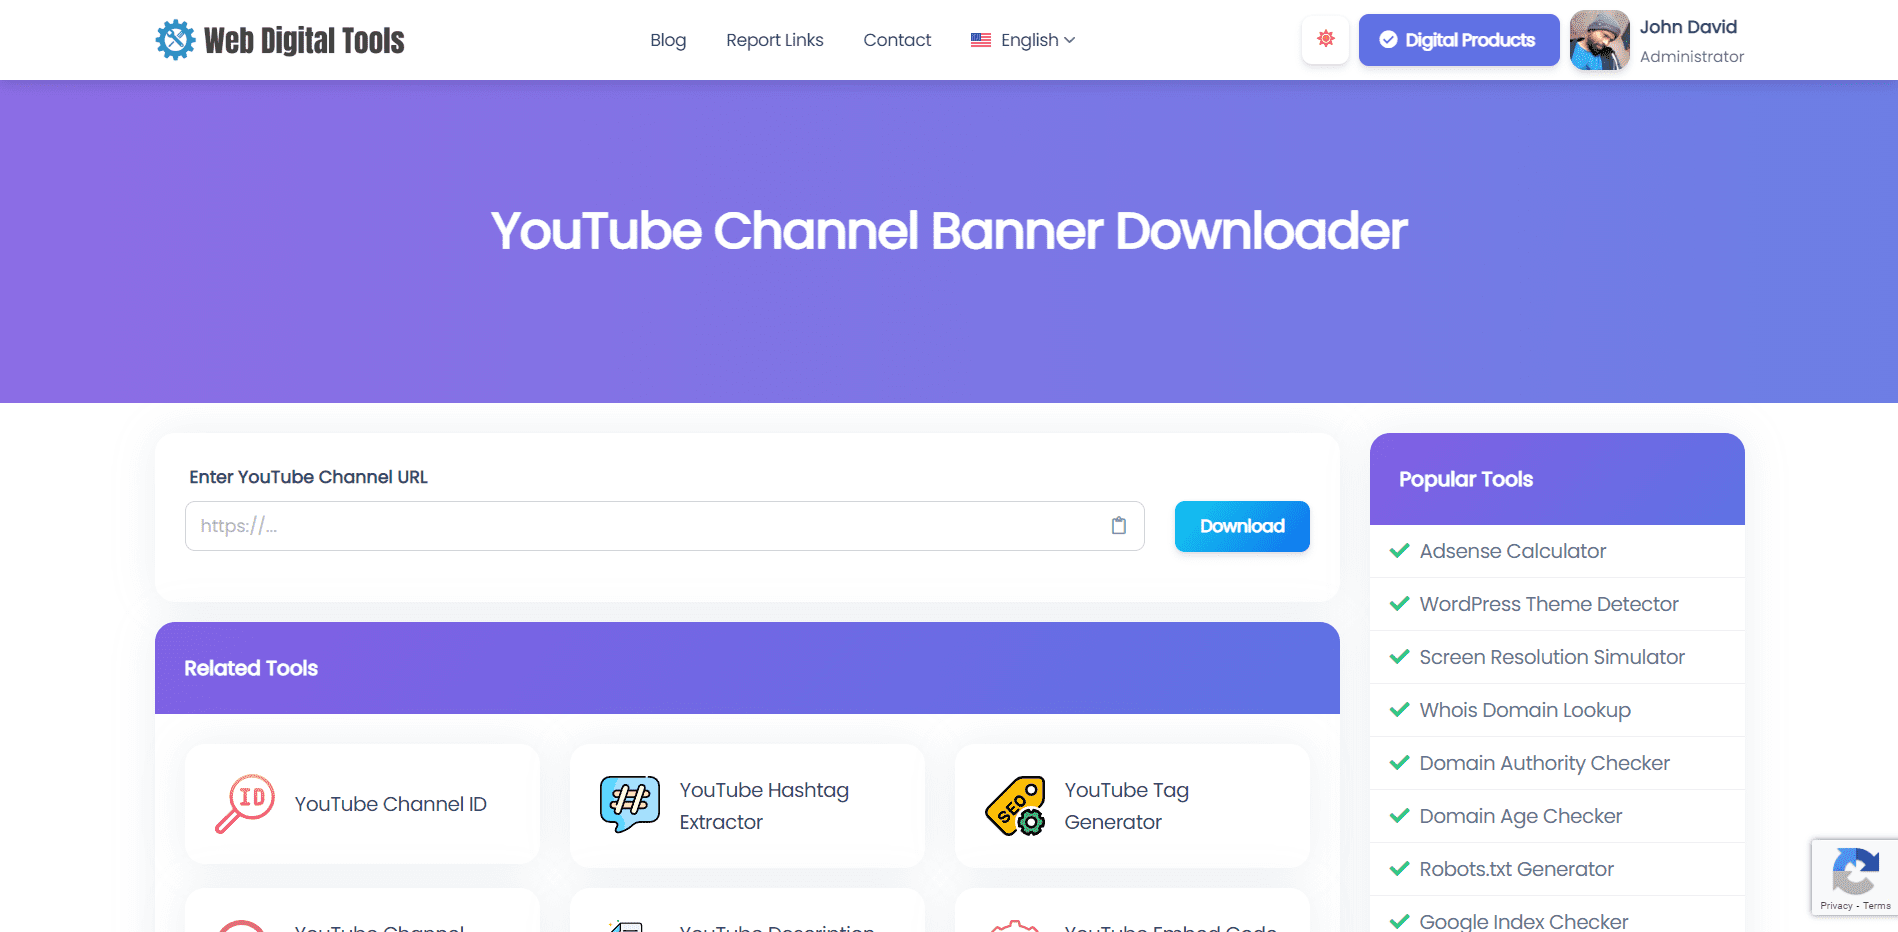 YouTube Channel Banner Downloader